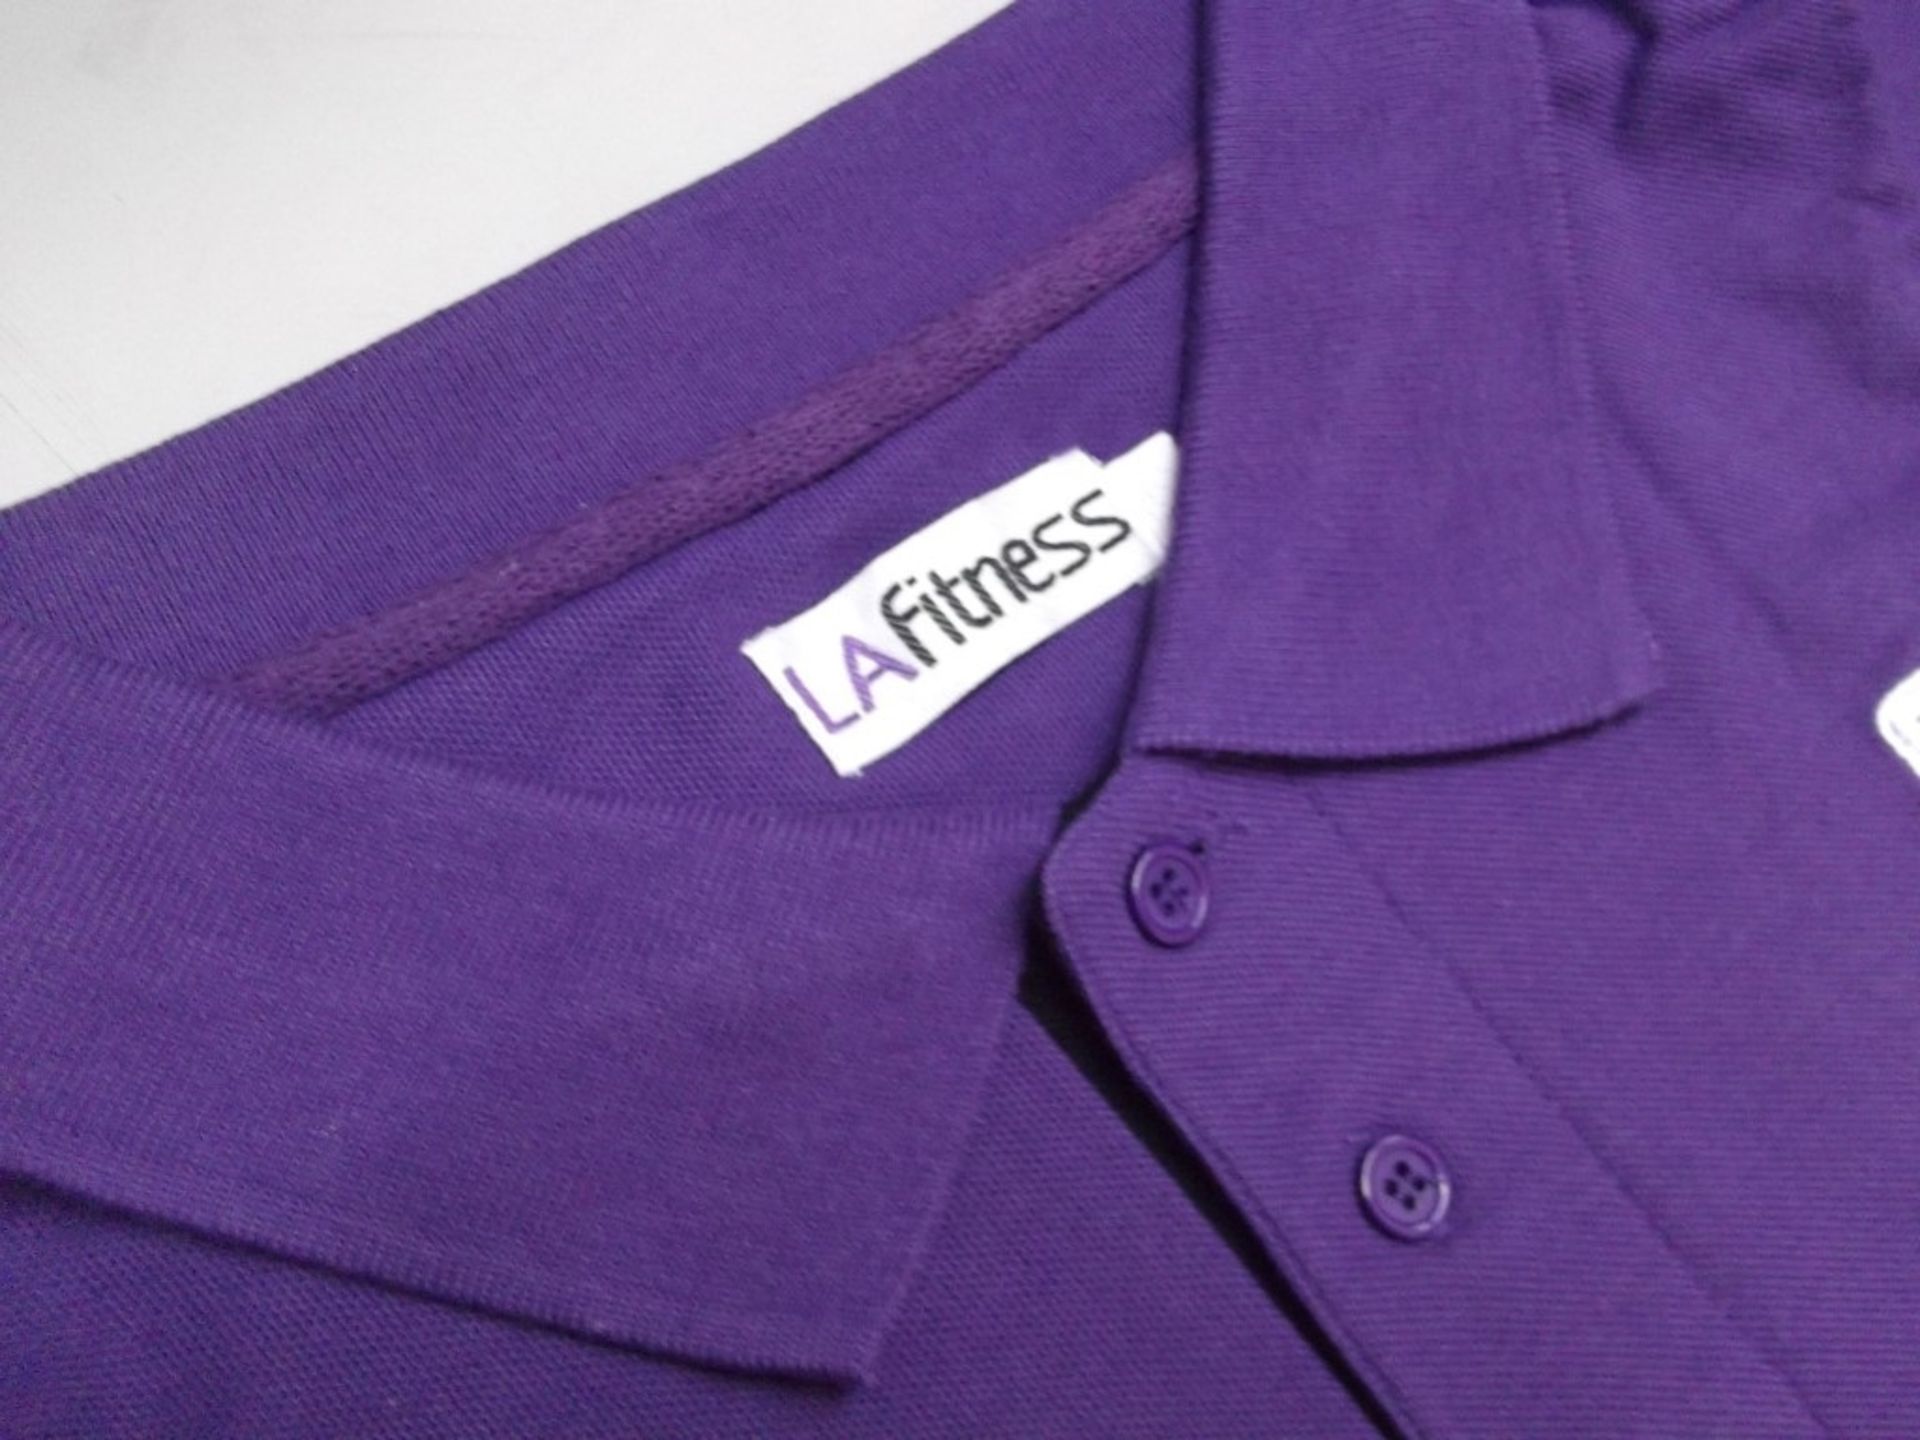 55 x LA Fitness Branded Ladies POLO Shirts - Size: Large - Colour: Purple - CL155 - Ref: JIM153 - - Image 3 of 6